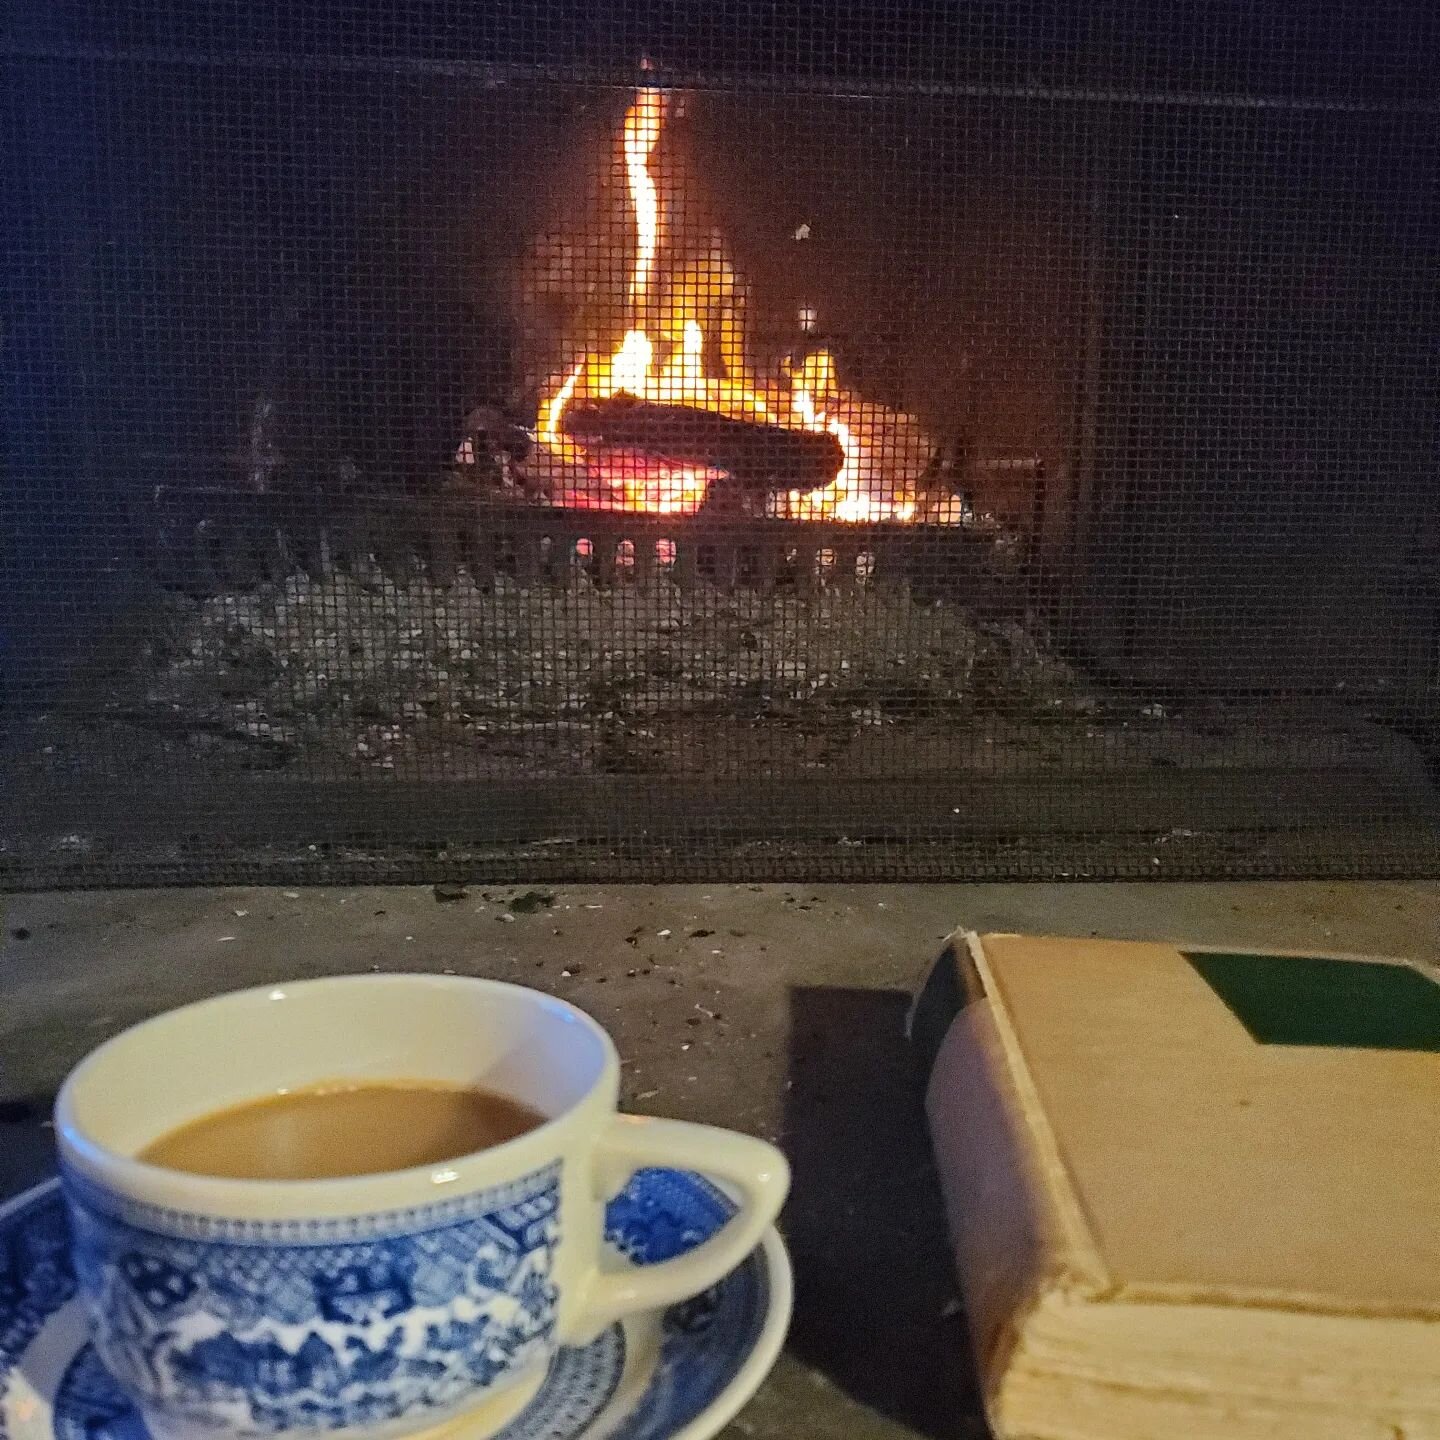 Morning routine, coffee and real books 📚 #quietlife #simplelife #donnadavisartbythesea #blueandwhitechina